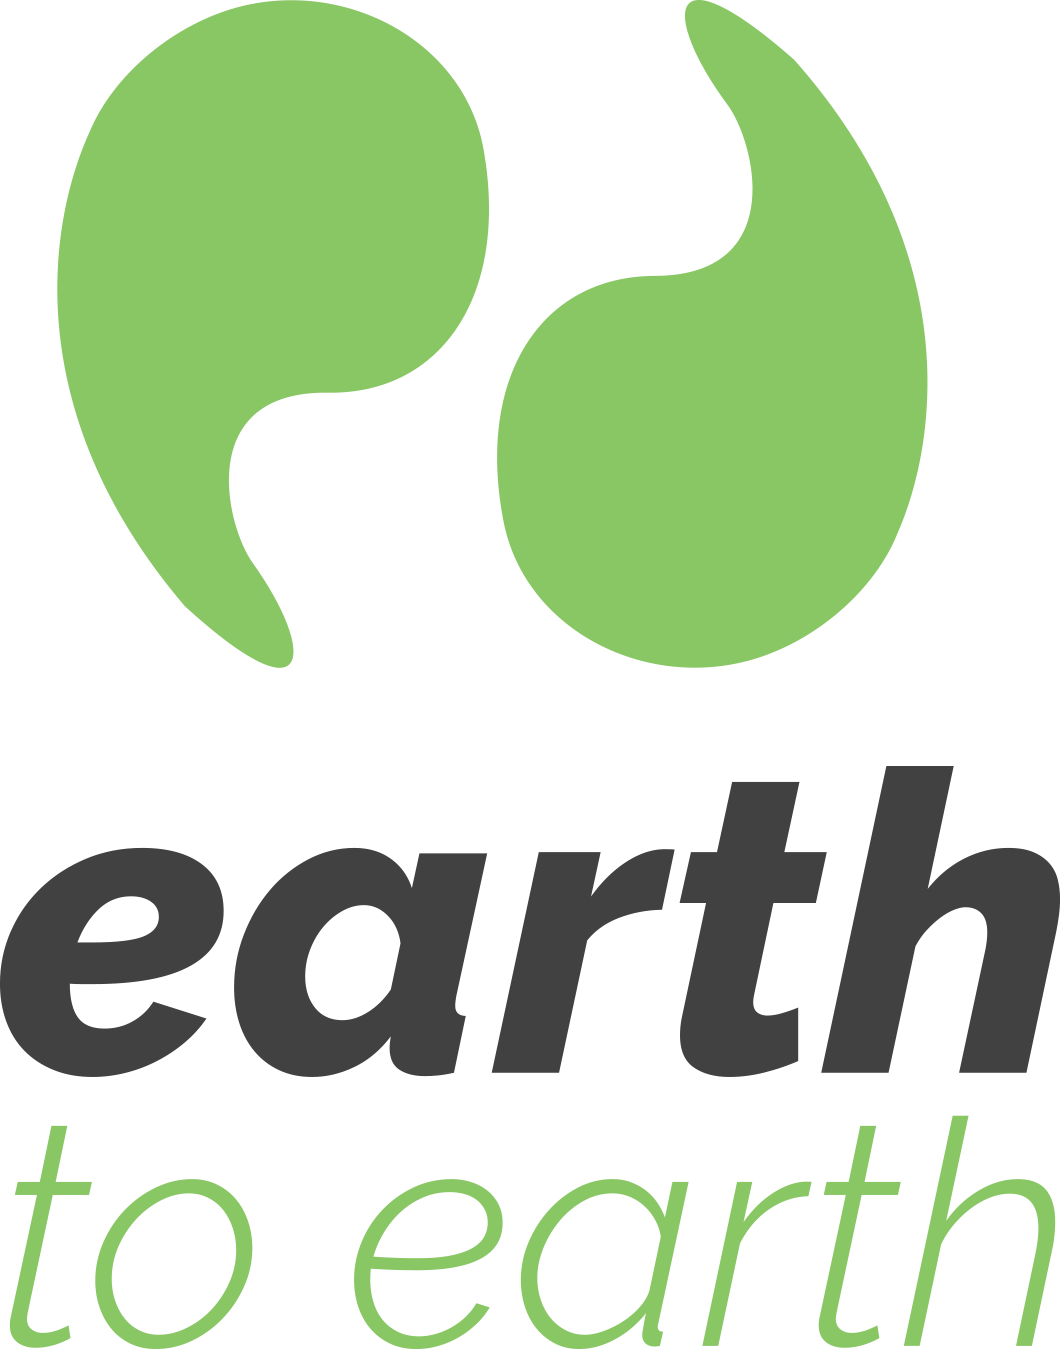 Earth to Earth